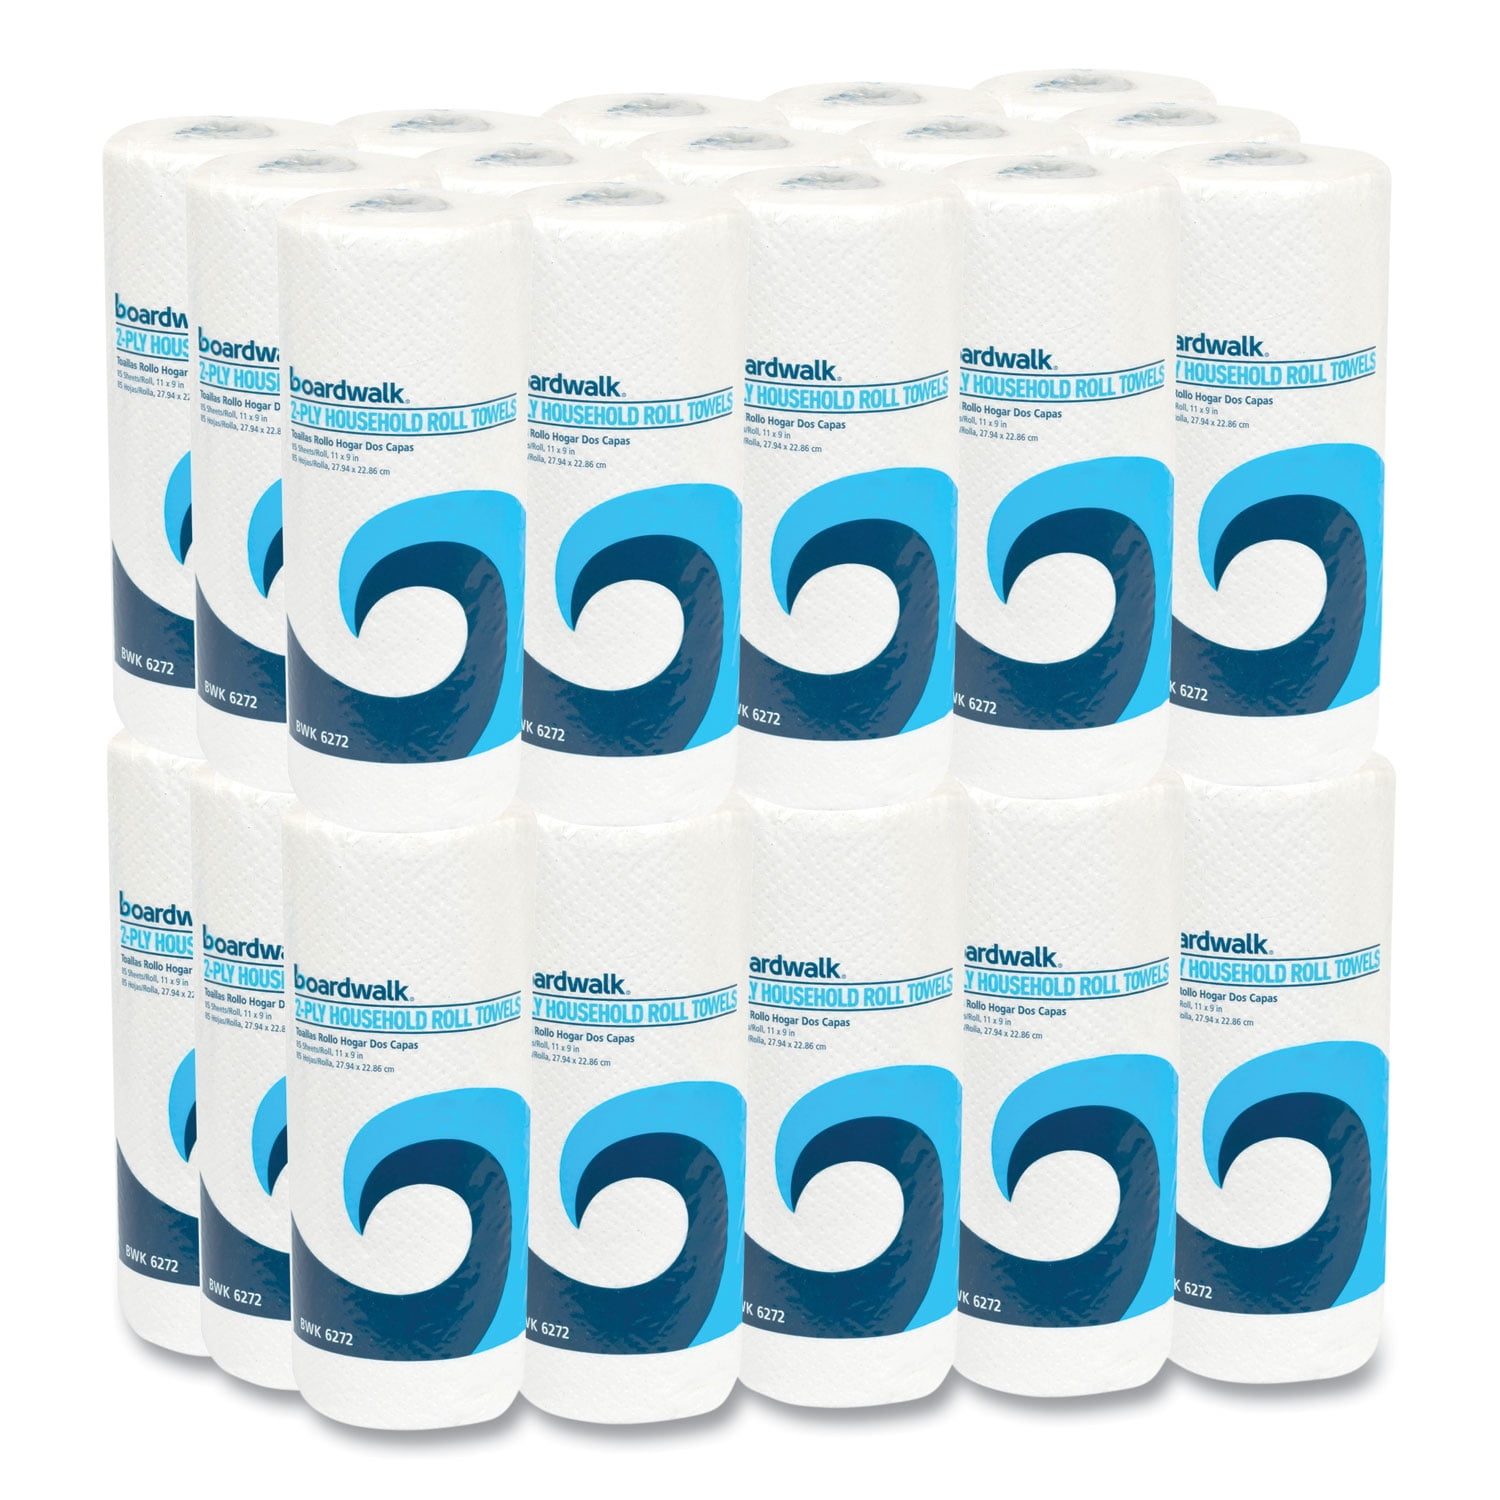 Kleenex Kcc13964 Premiere Kitchen Roll Towels White 70/roll 24 Rolls/carton for sale online 